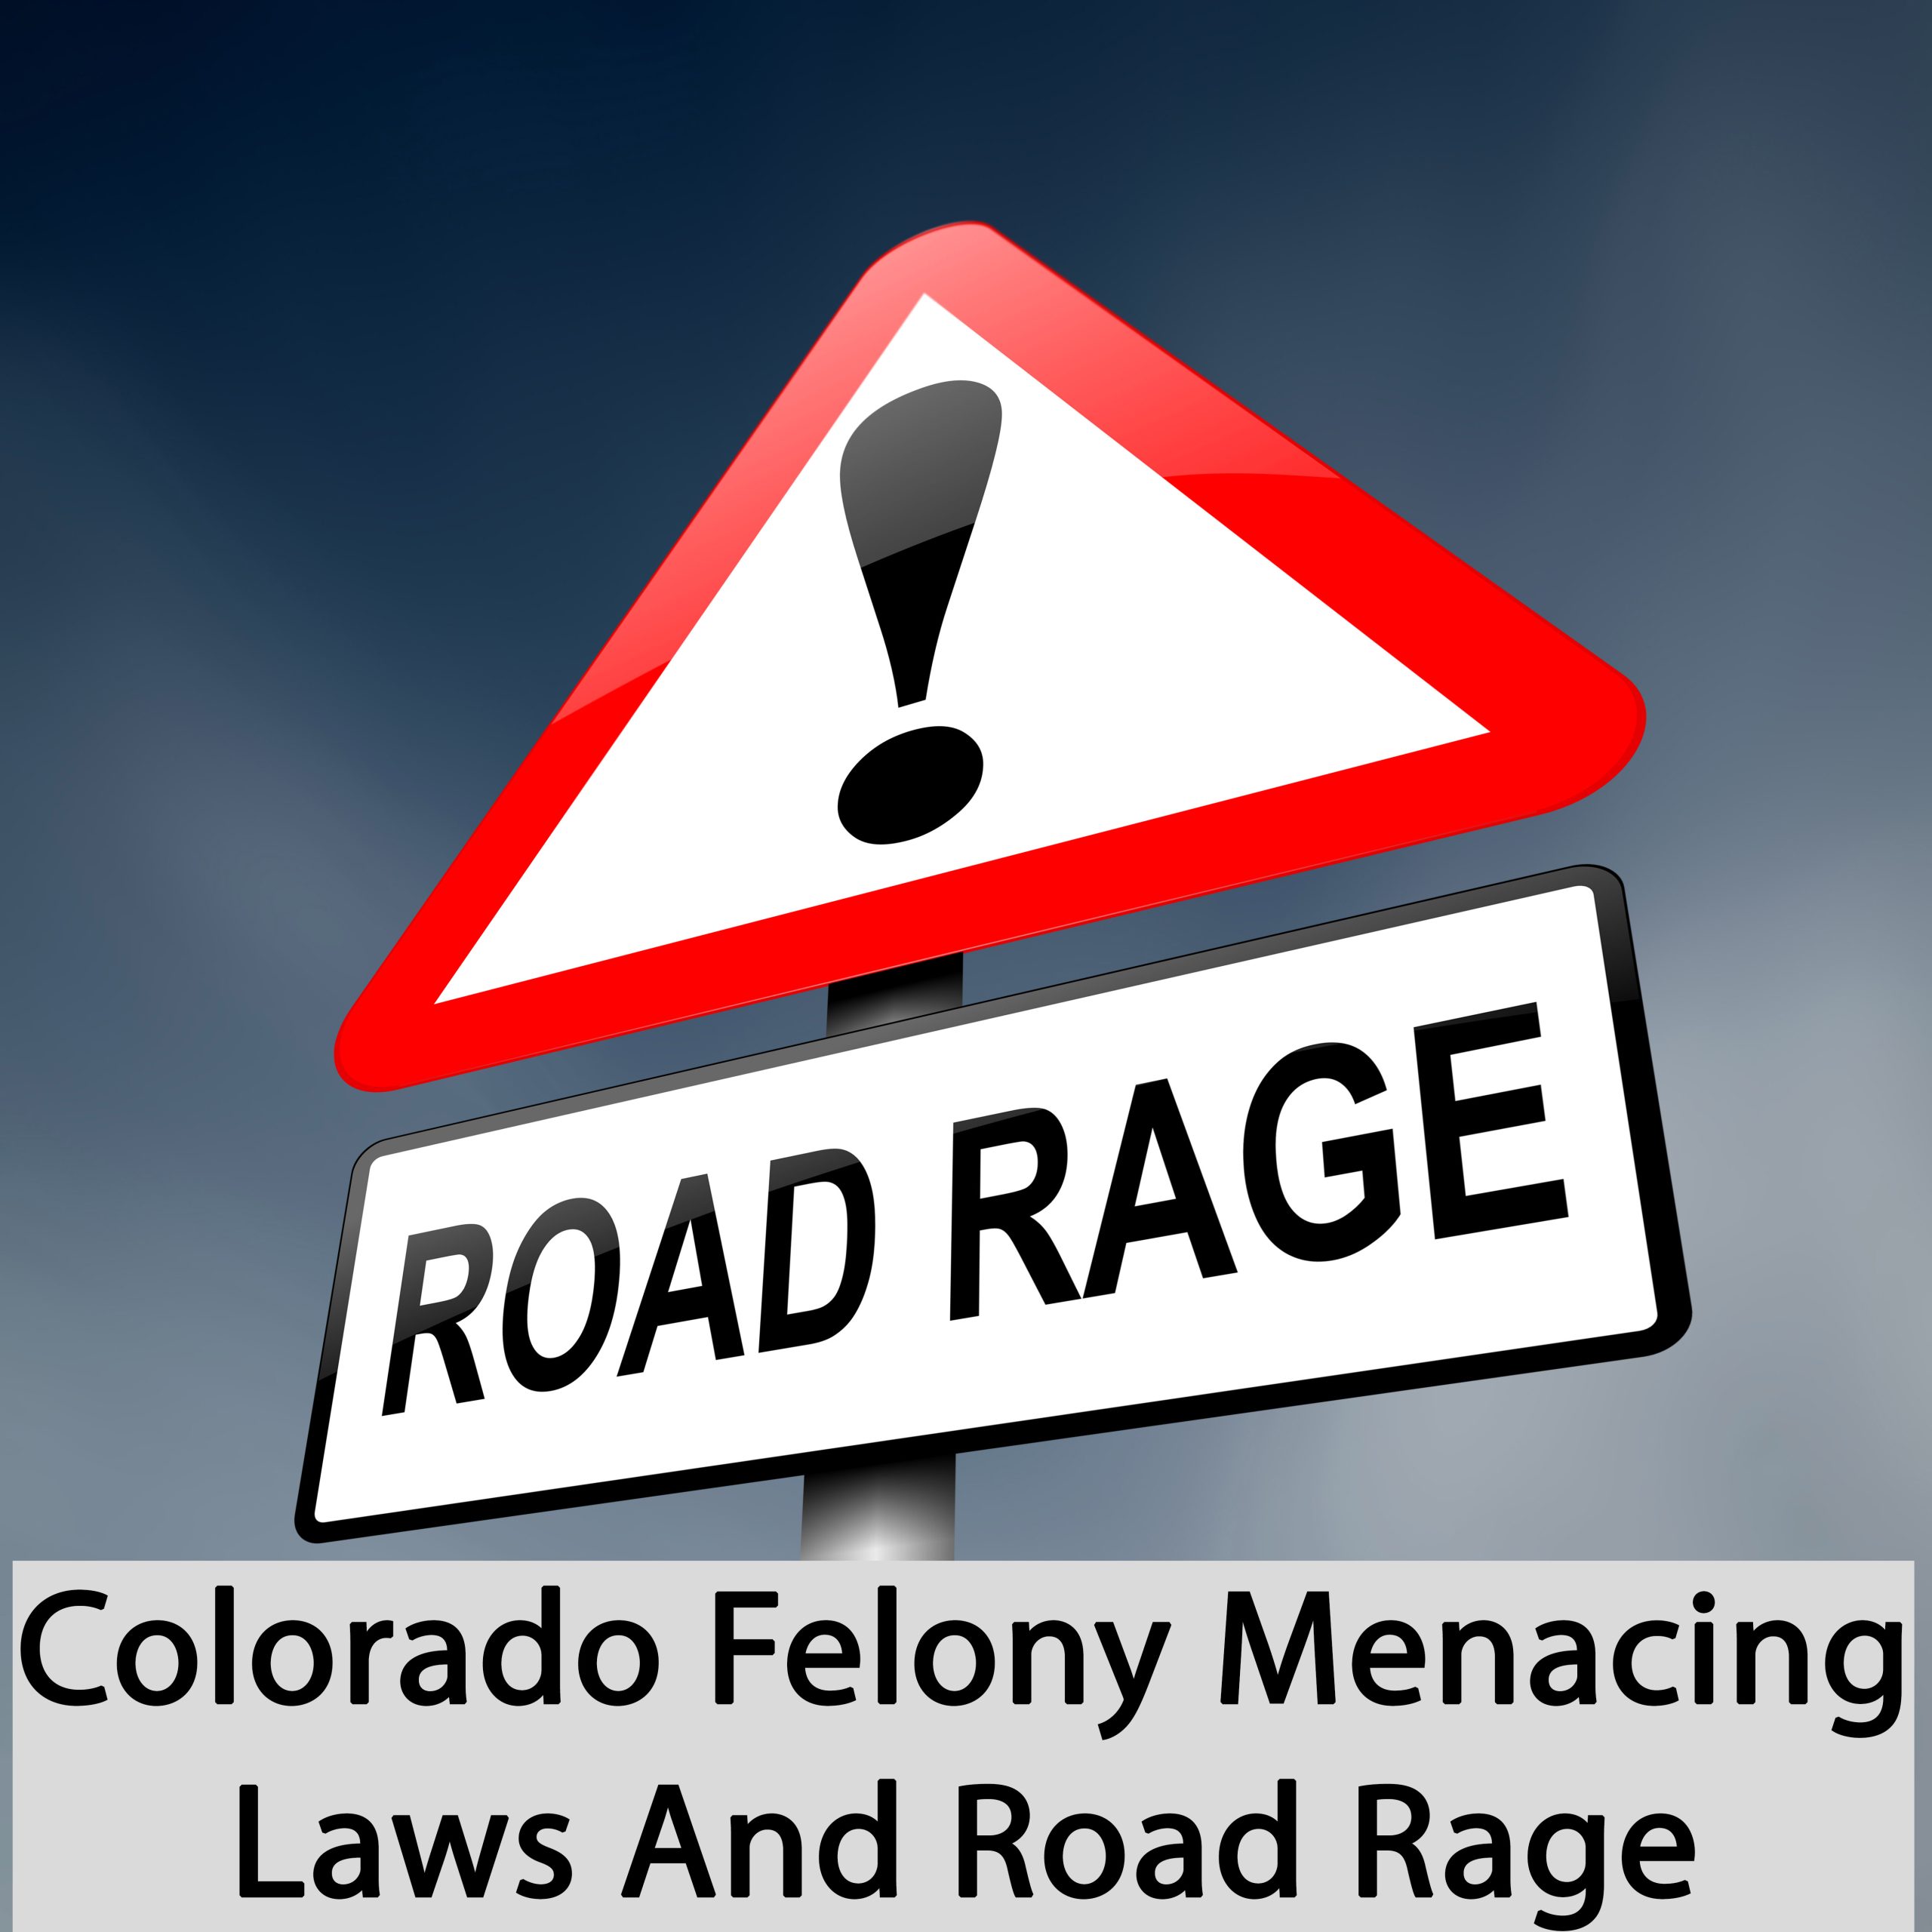 Felony Menacing in Colorado ‹ What Are the Penalties? ›